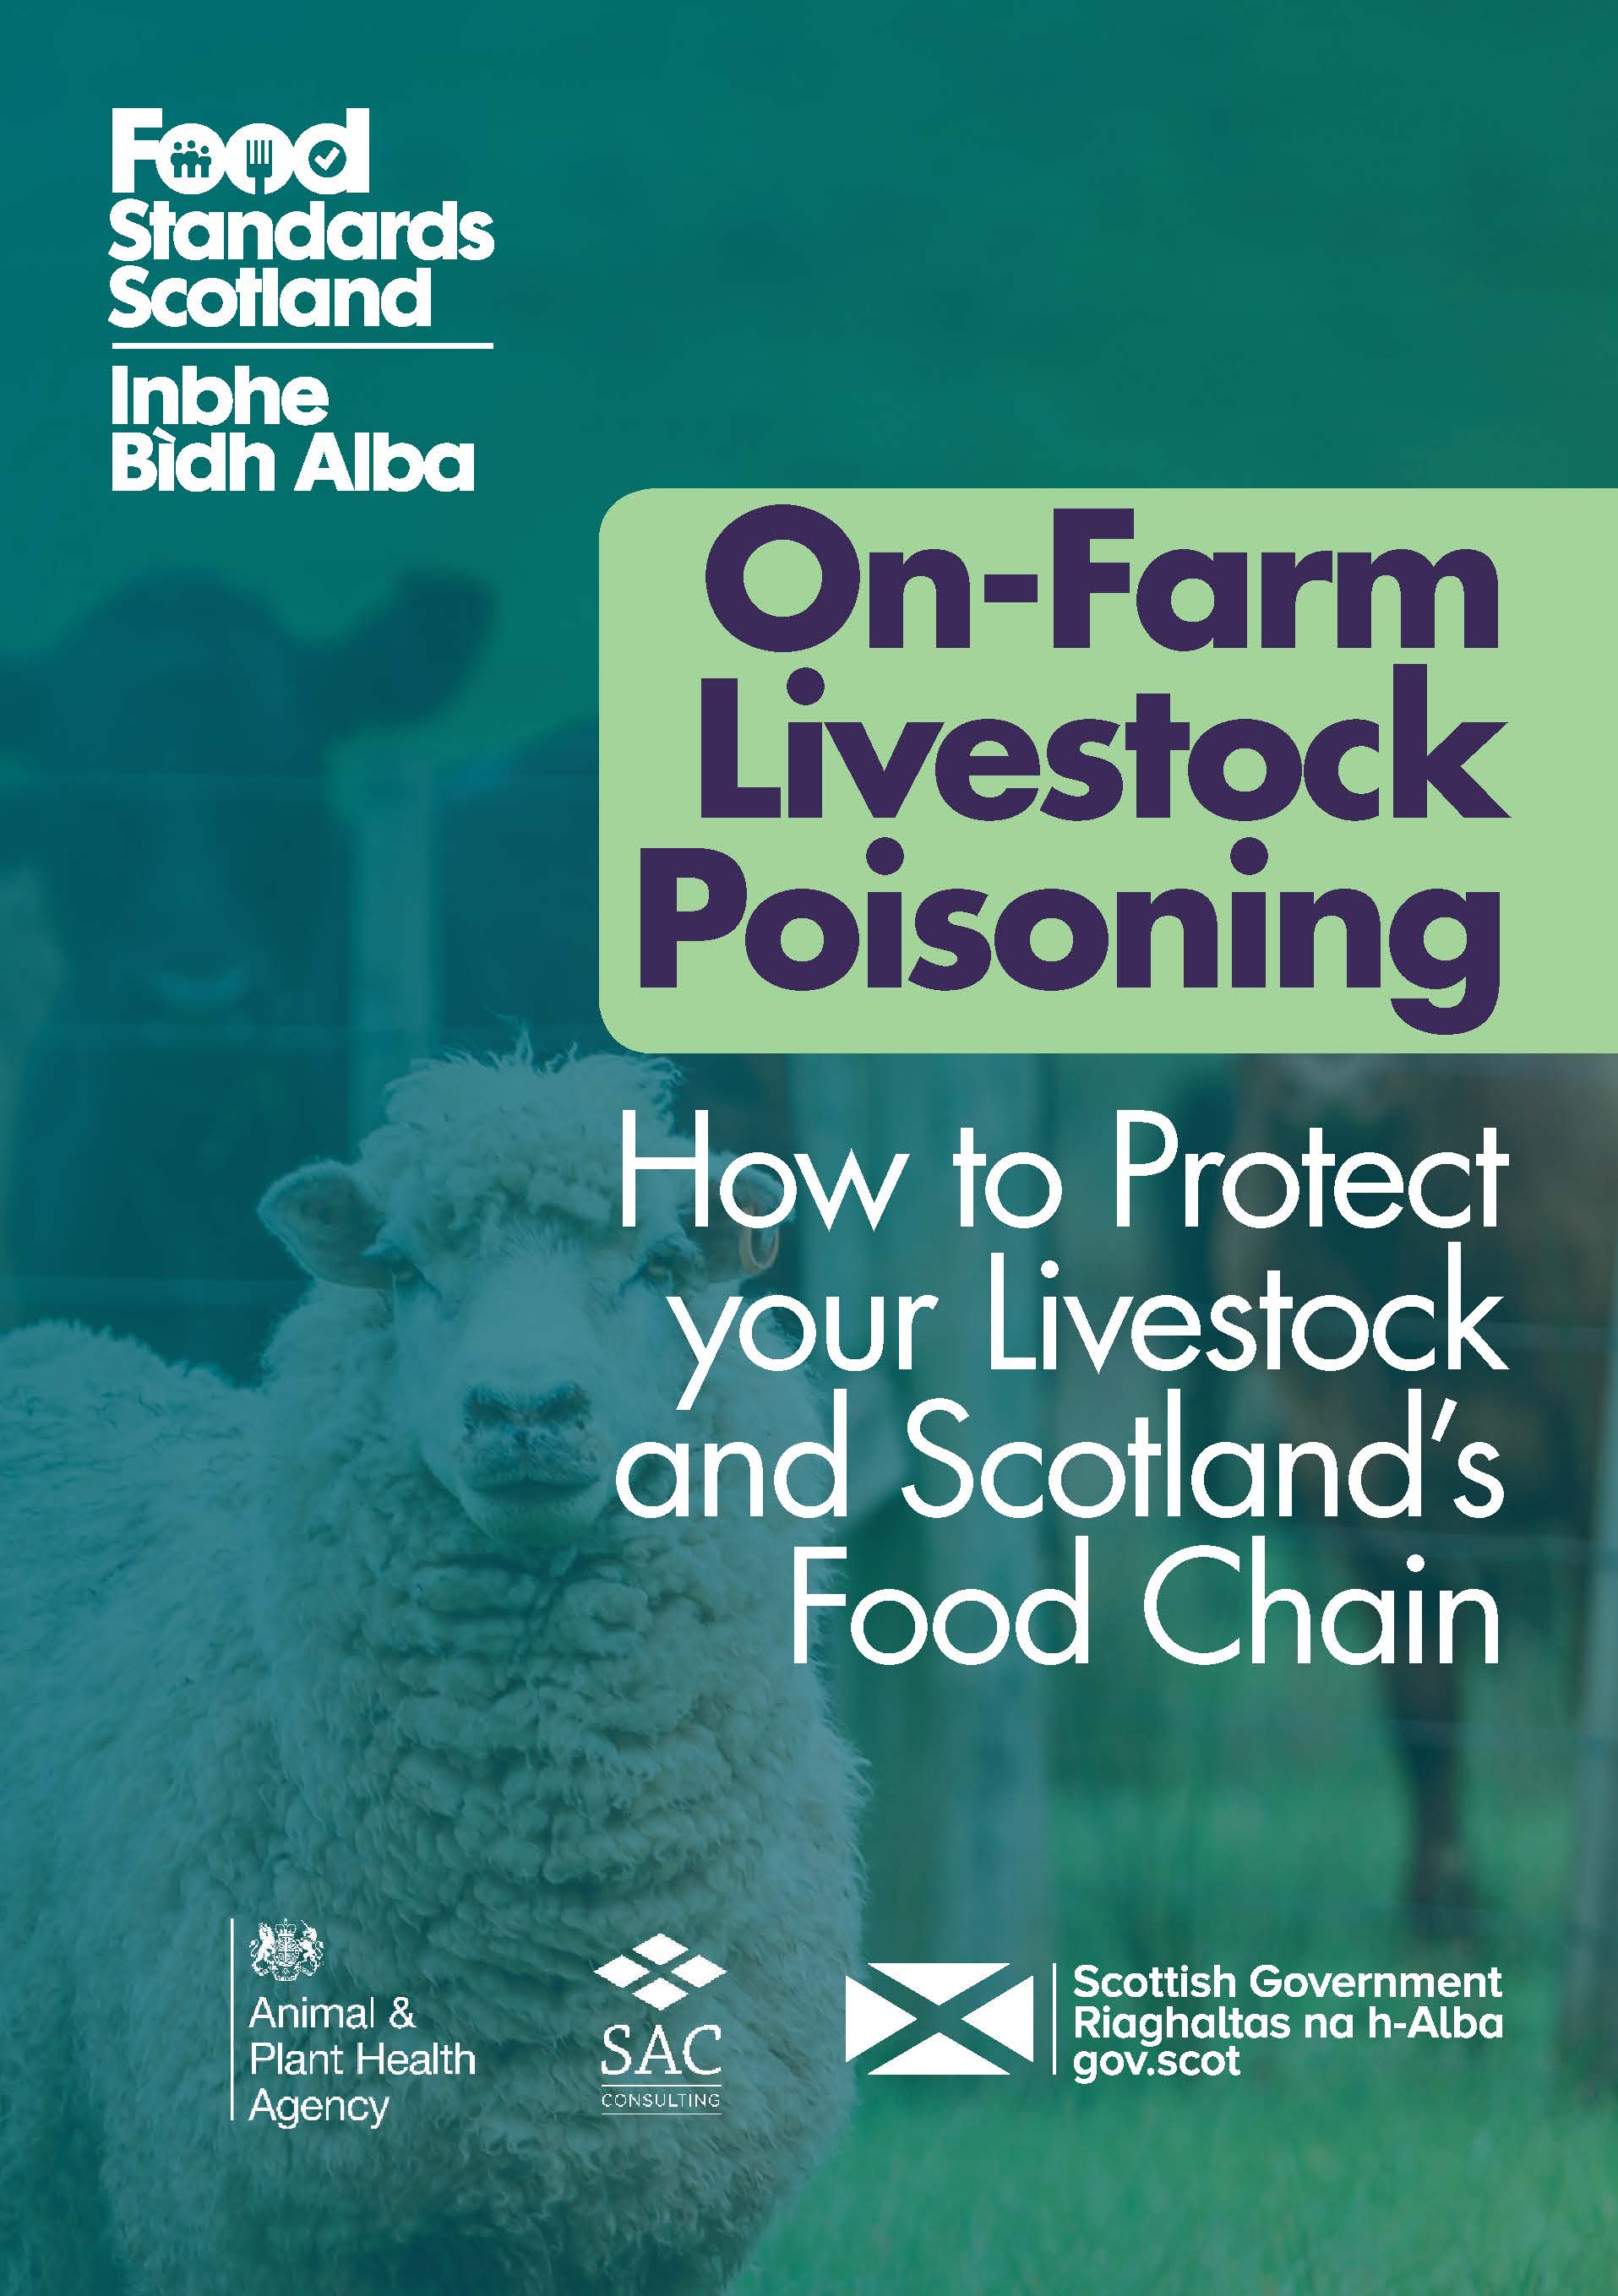 Food Standards Scotland On Farm Poisoning leaflet cover